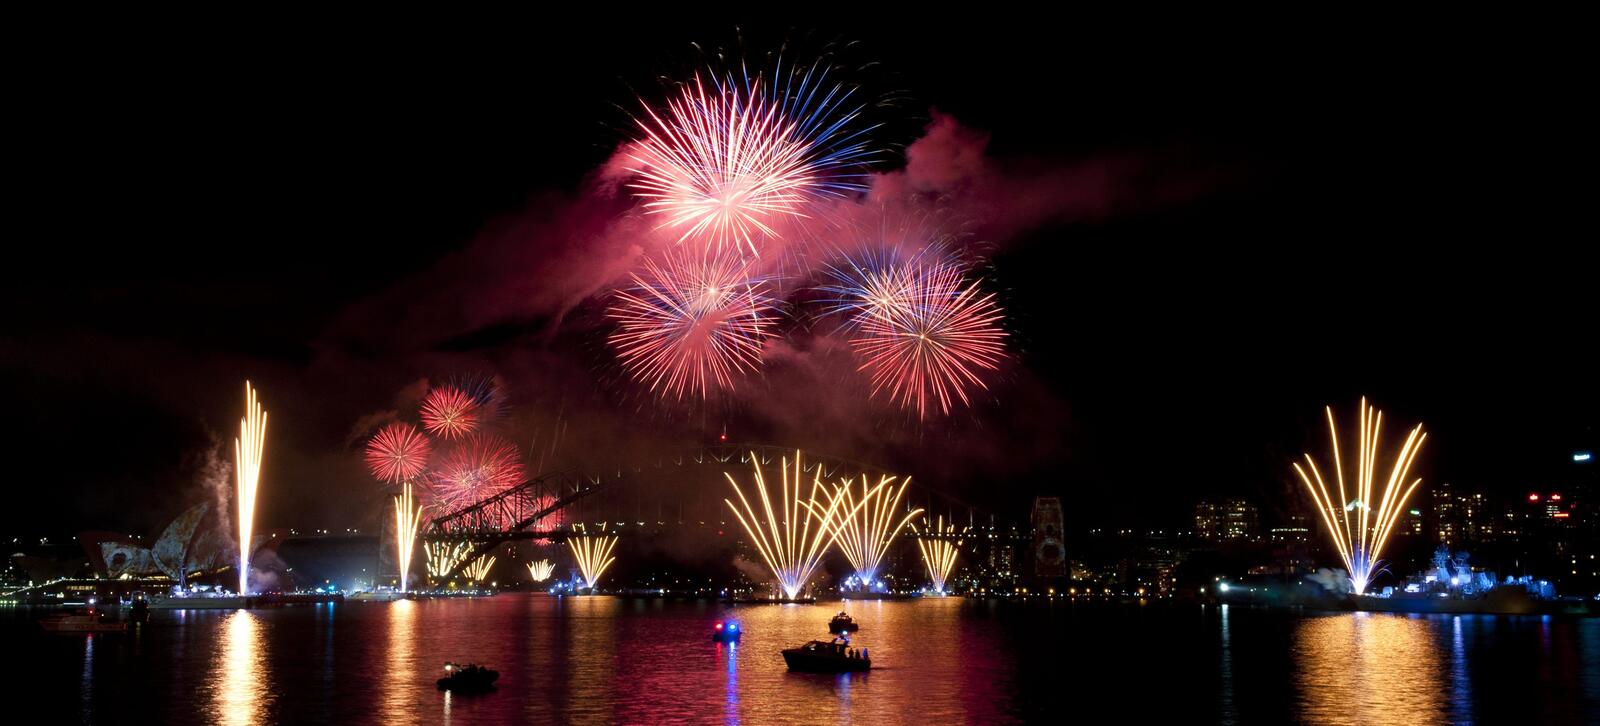 Wallpapers Sydney fireworks explosion on the desktop